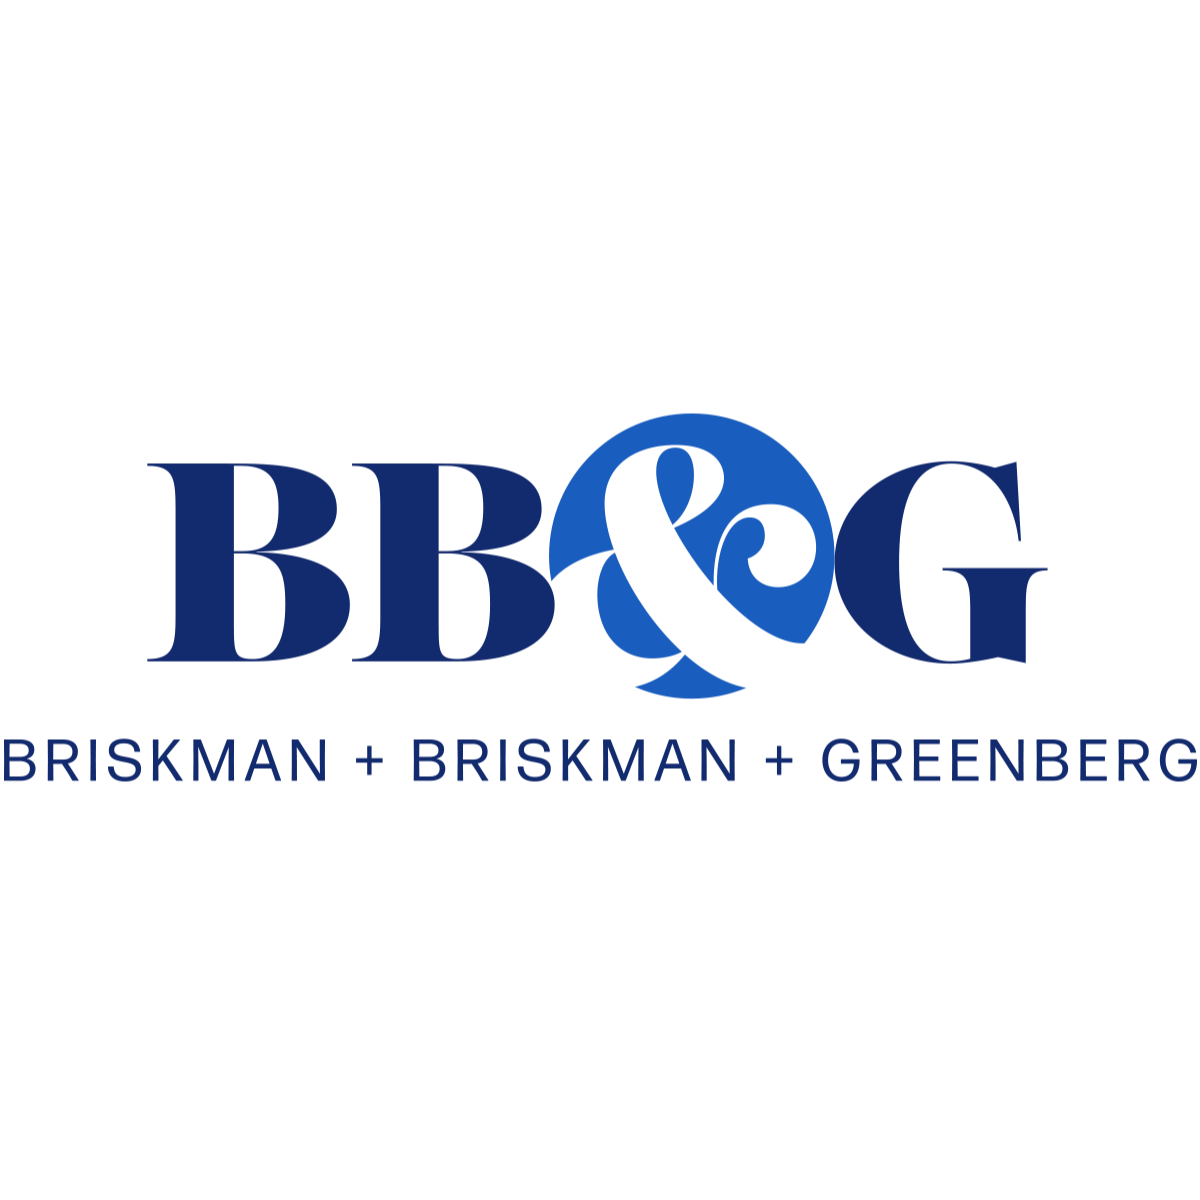 Briskman Briskman & Greenberg - Chicago, IL 60606 - (312)222-0010 | ShowMeLocal.com